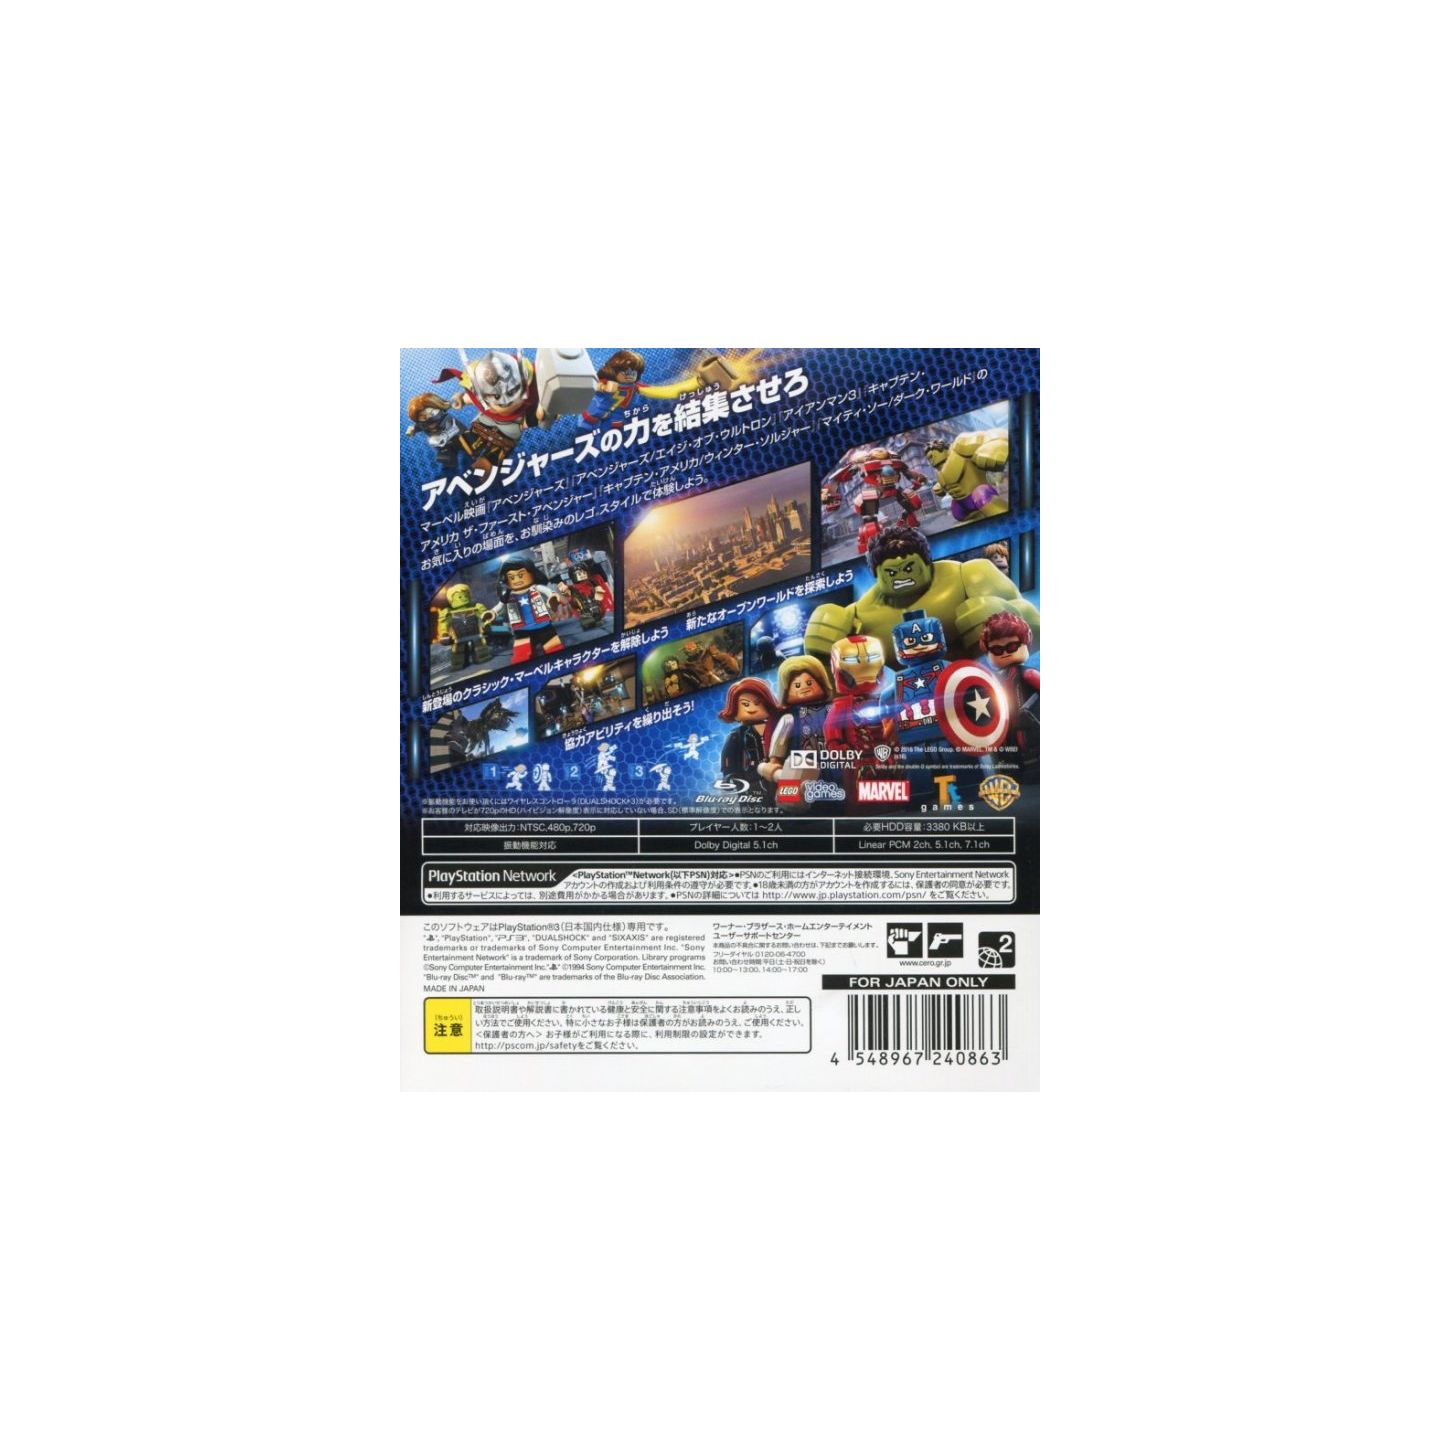 Lego Marvel Avengers PS4 Disc Only